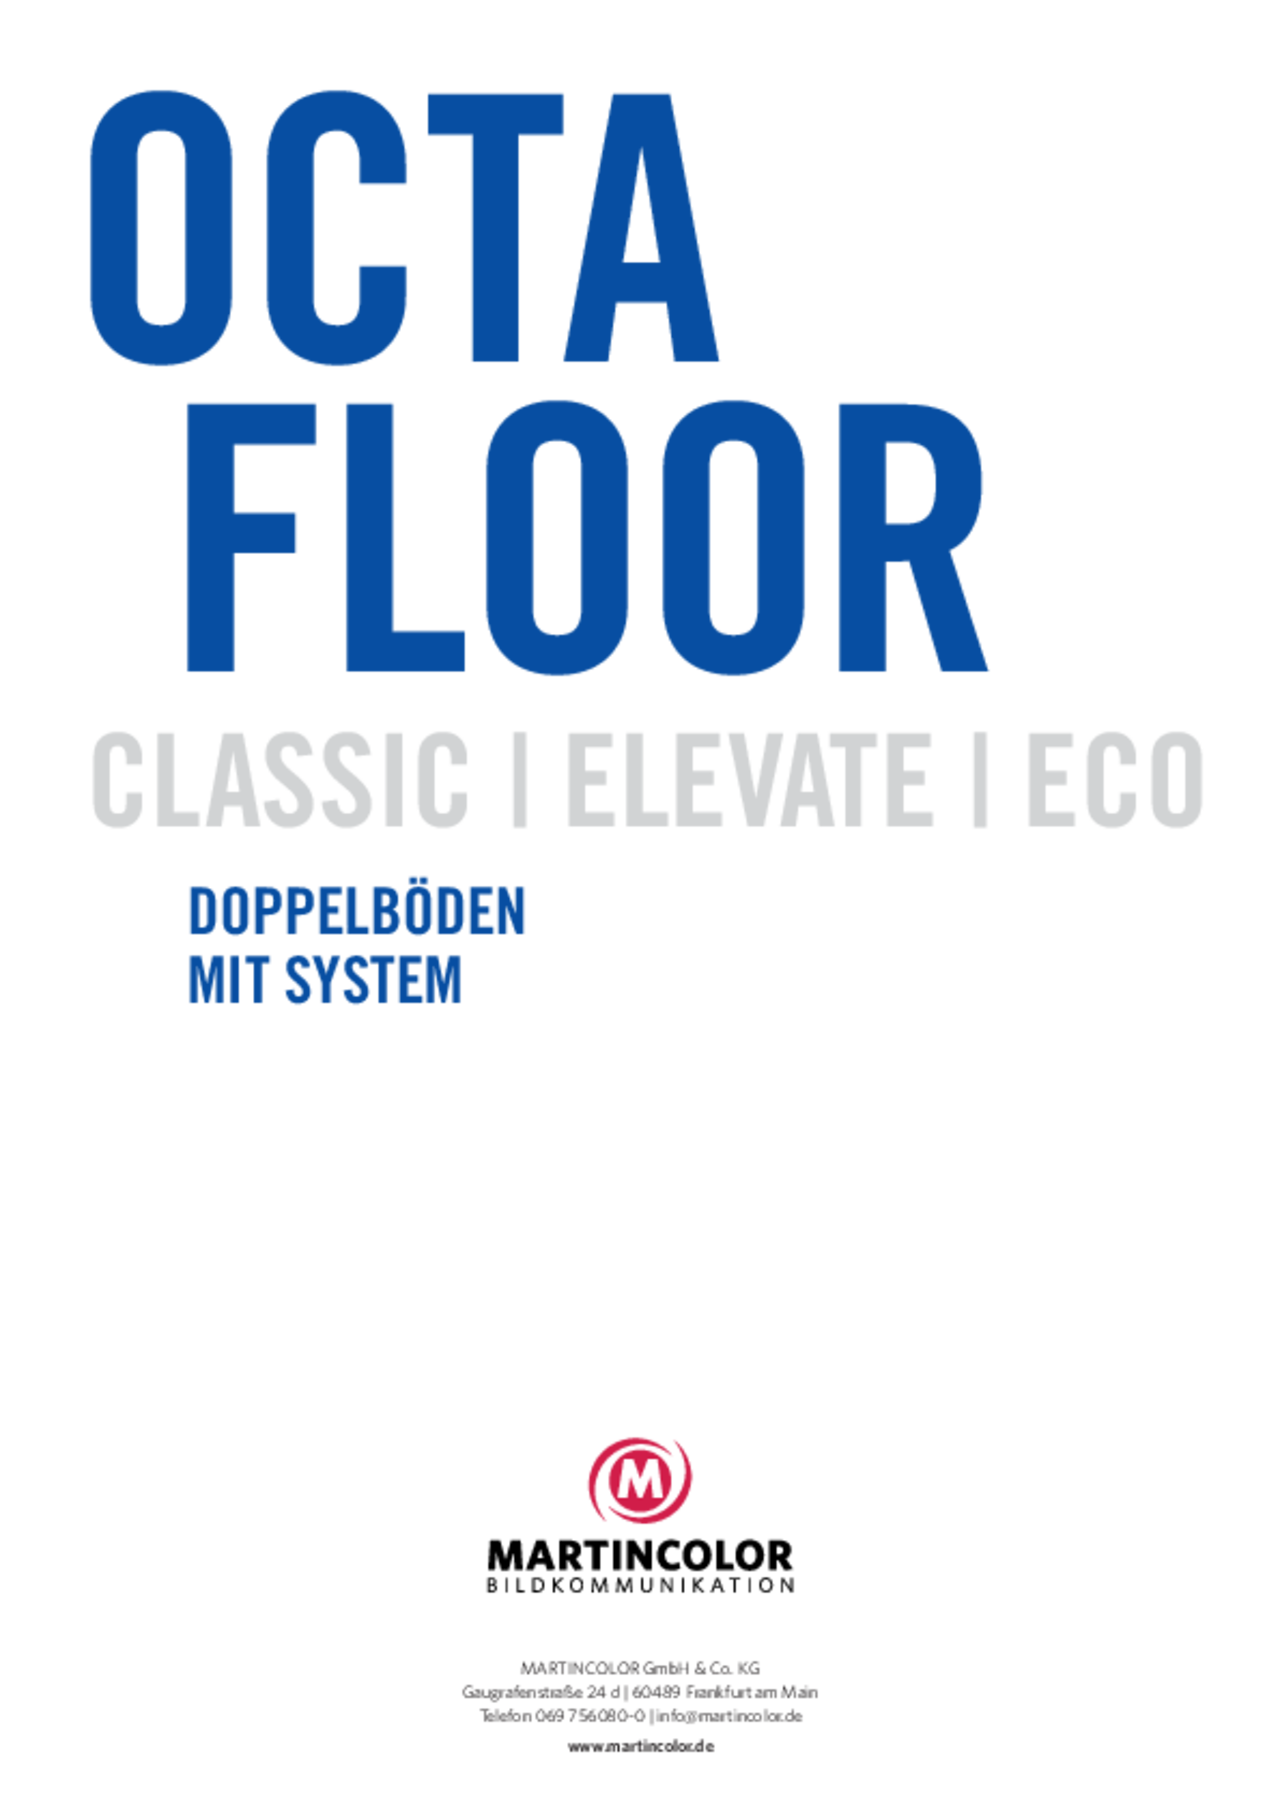 OCTAclassic floor brochure PDF